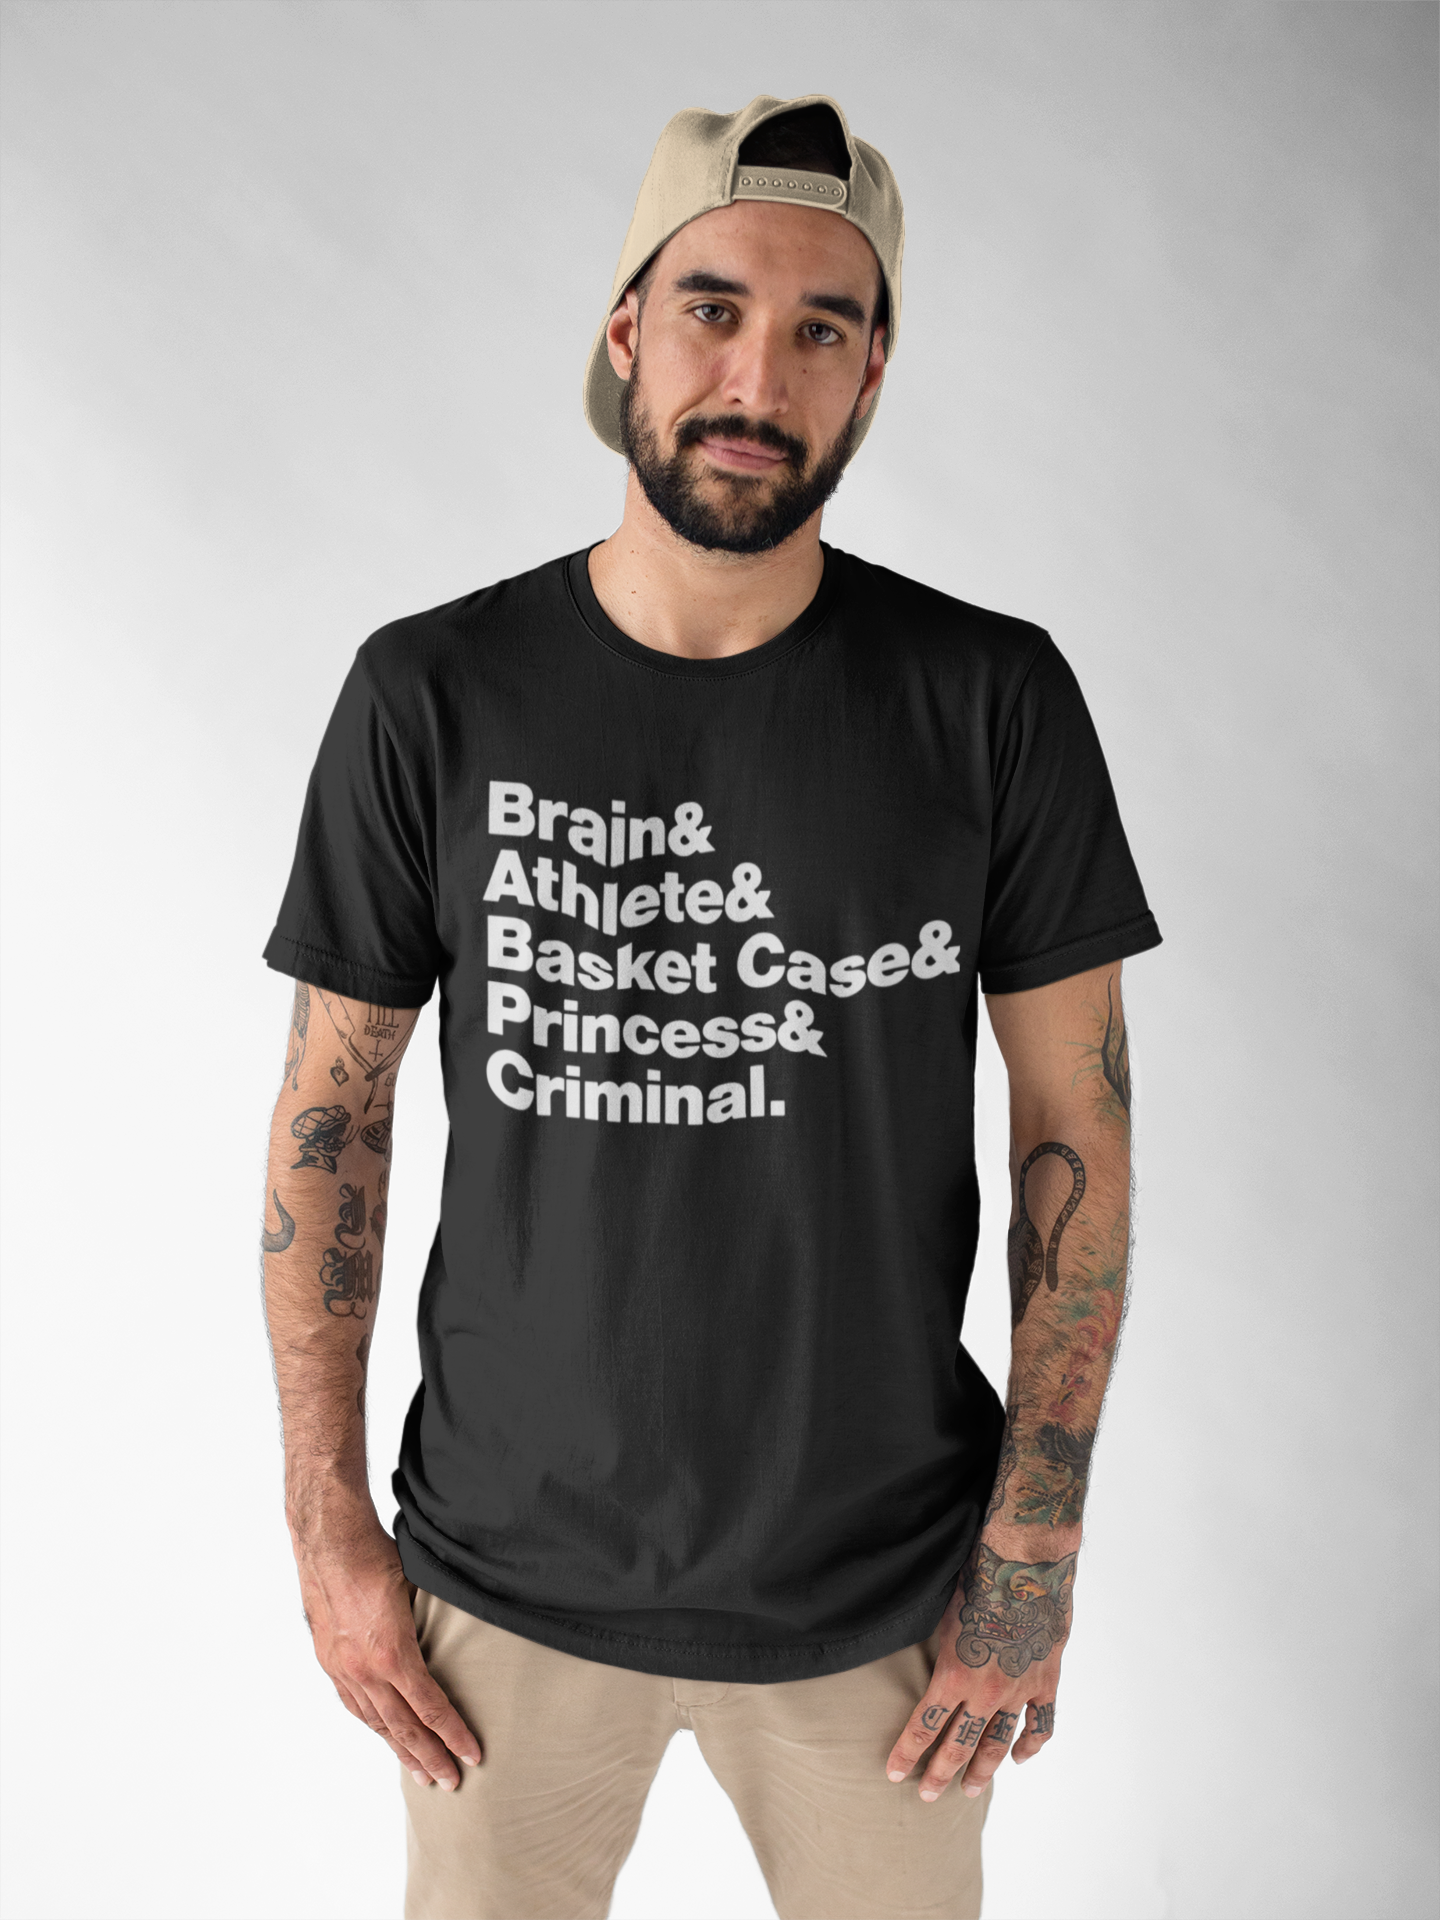 Breakfast Club T Shirt, Brian Johnson Quote Tshirt, Brain Athlete Basket Case Princess Criminal Shirt